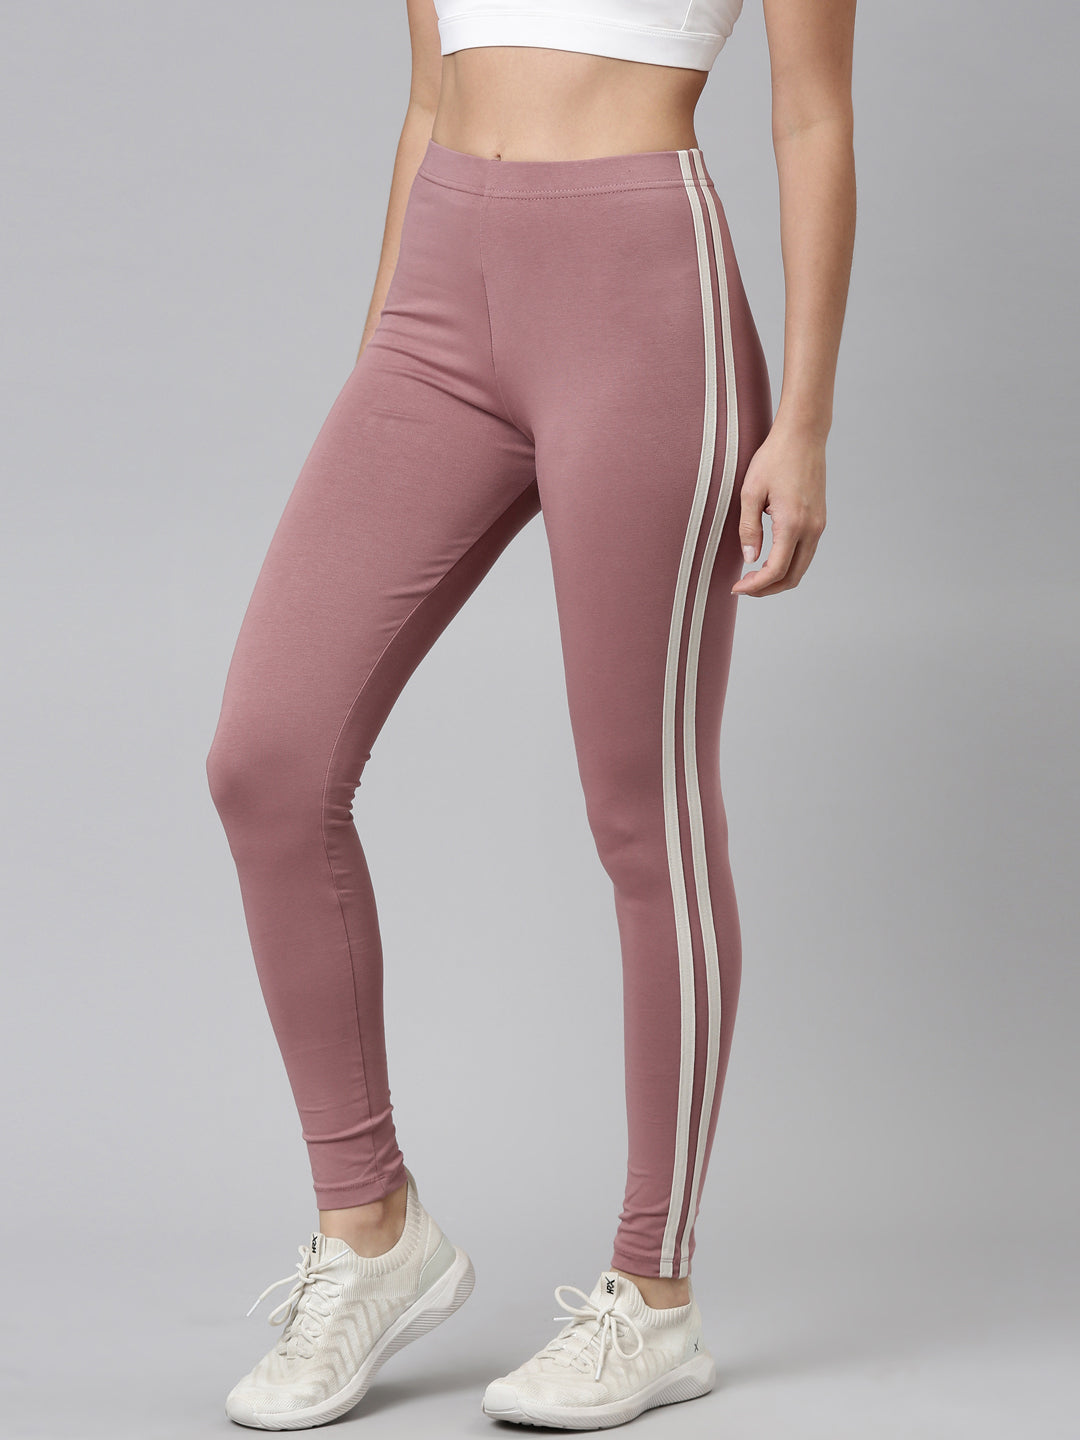 adidas Women's Essentials Linear Tights (Black/Energy Pink, XL